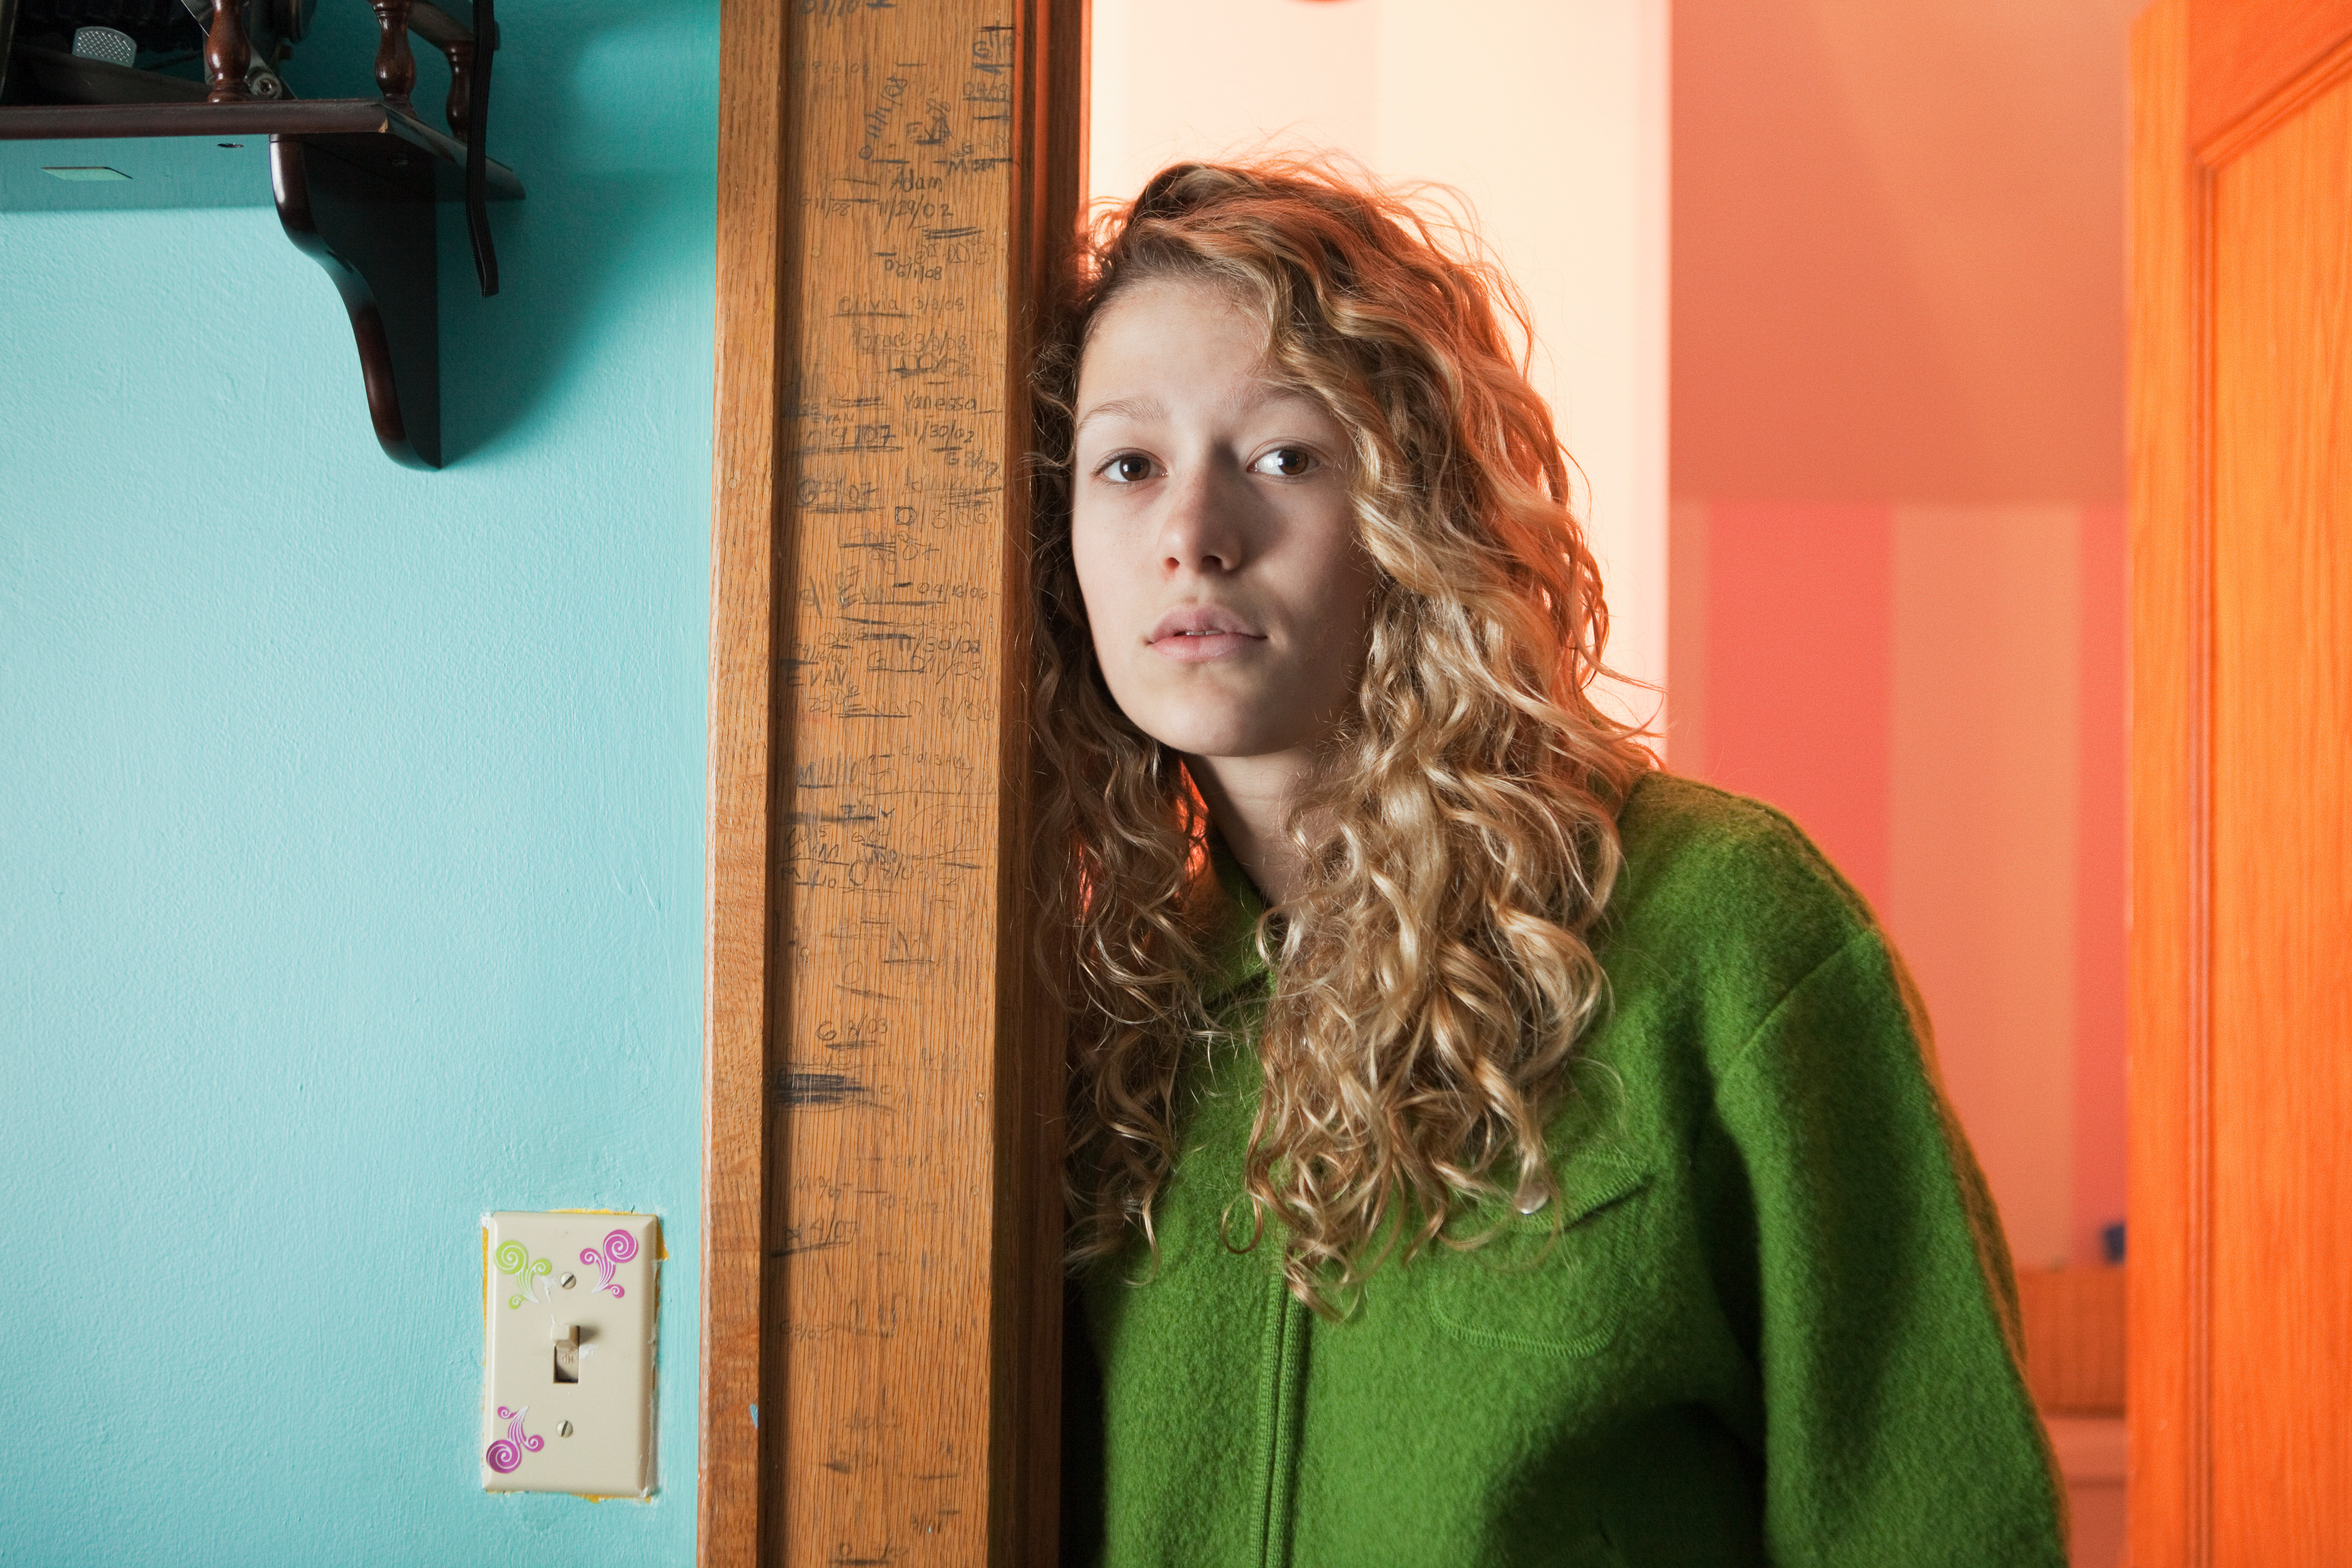 Teenage girl leaning in doorway, portrait | Source: Getty Images